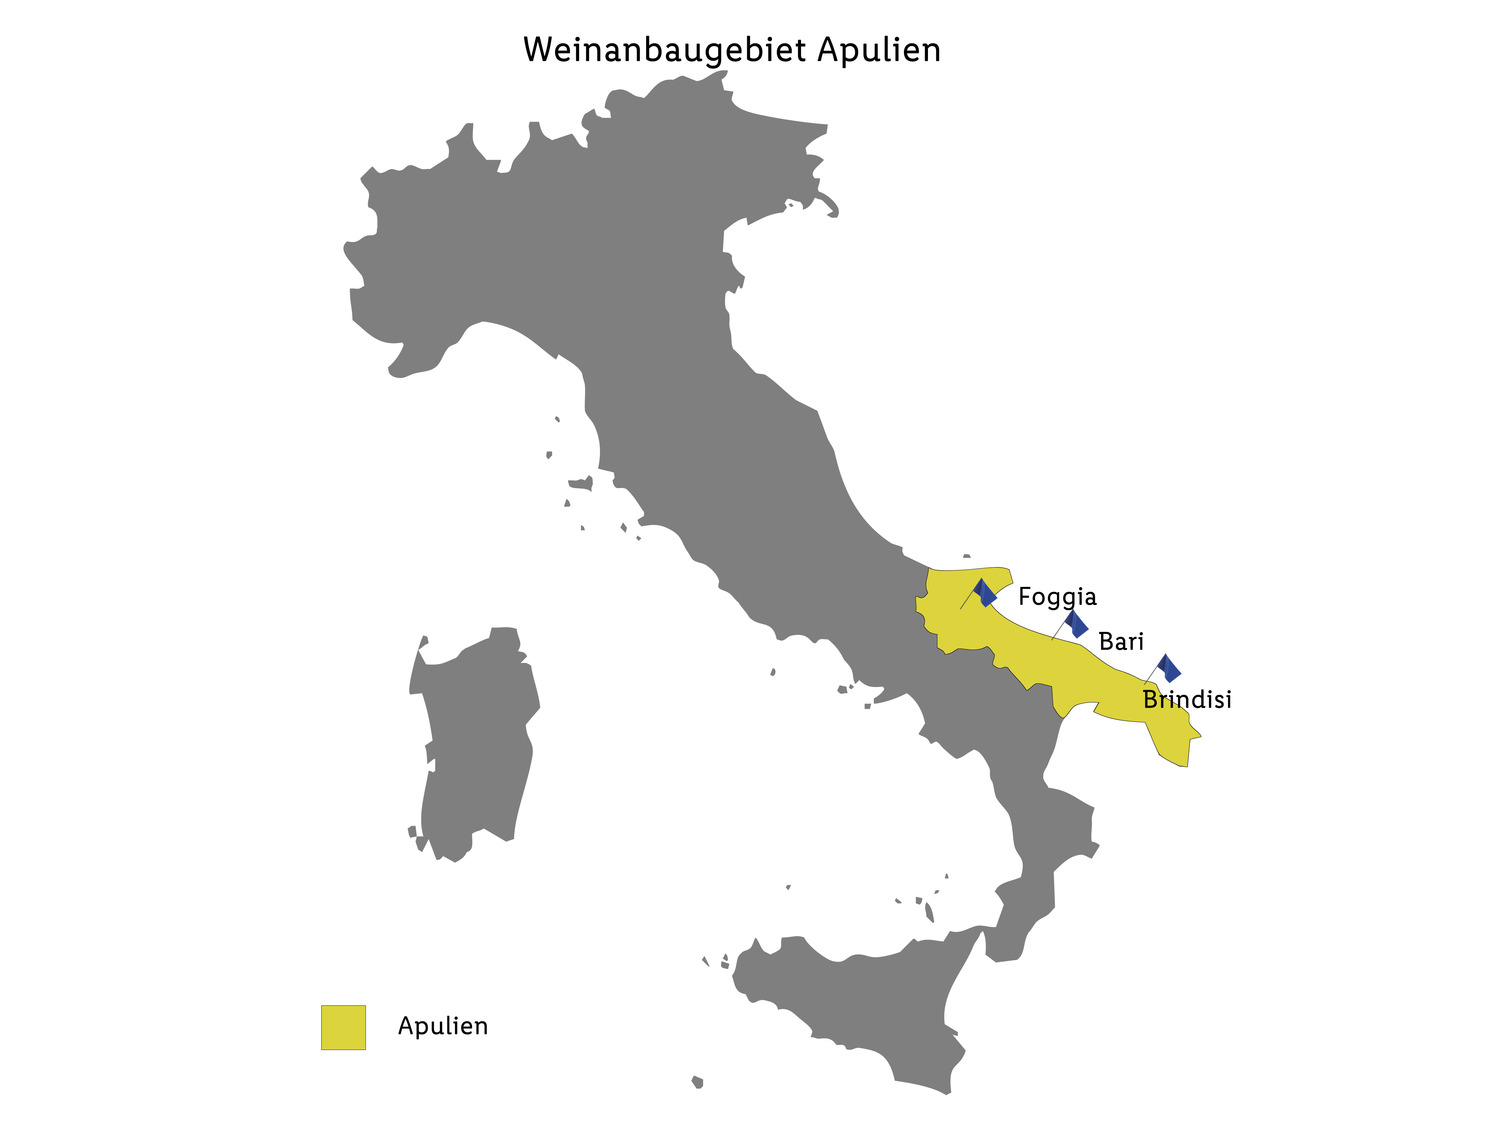 We are Italiano Chardonnay Puglia IGP trocken, Weißwei…